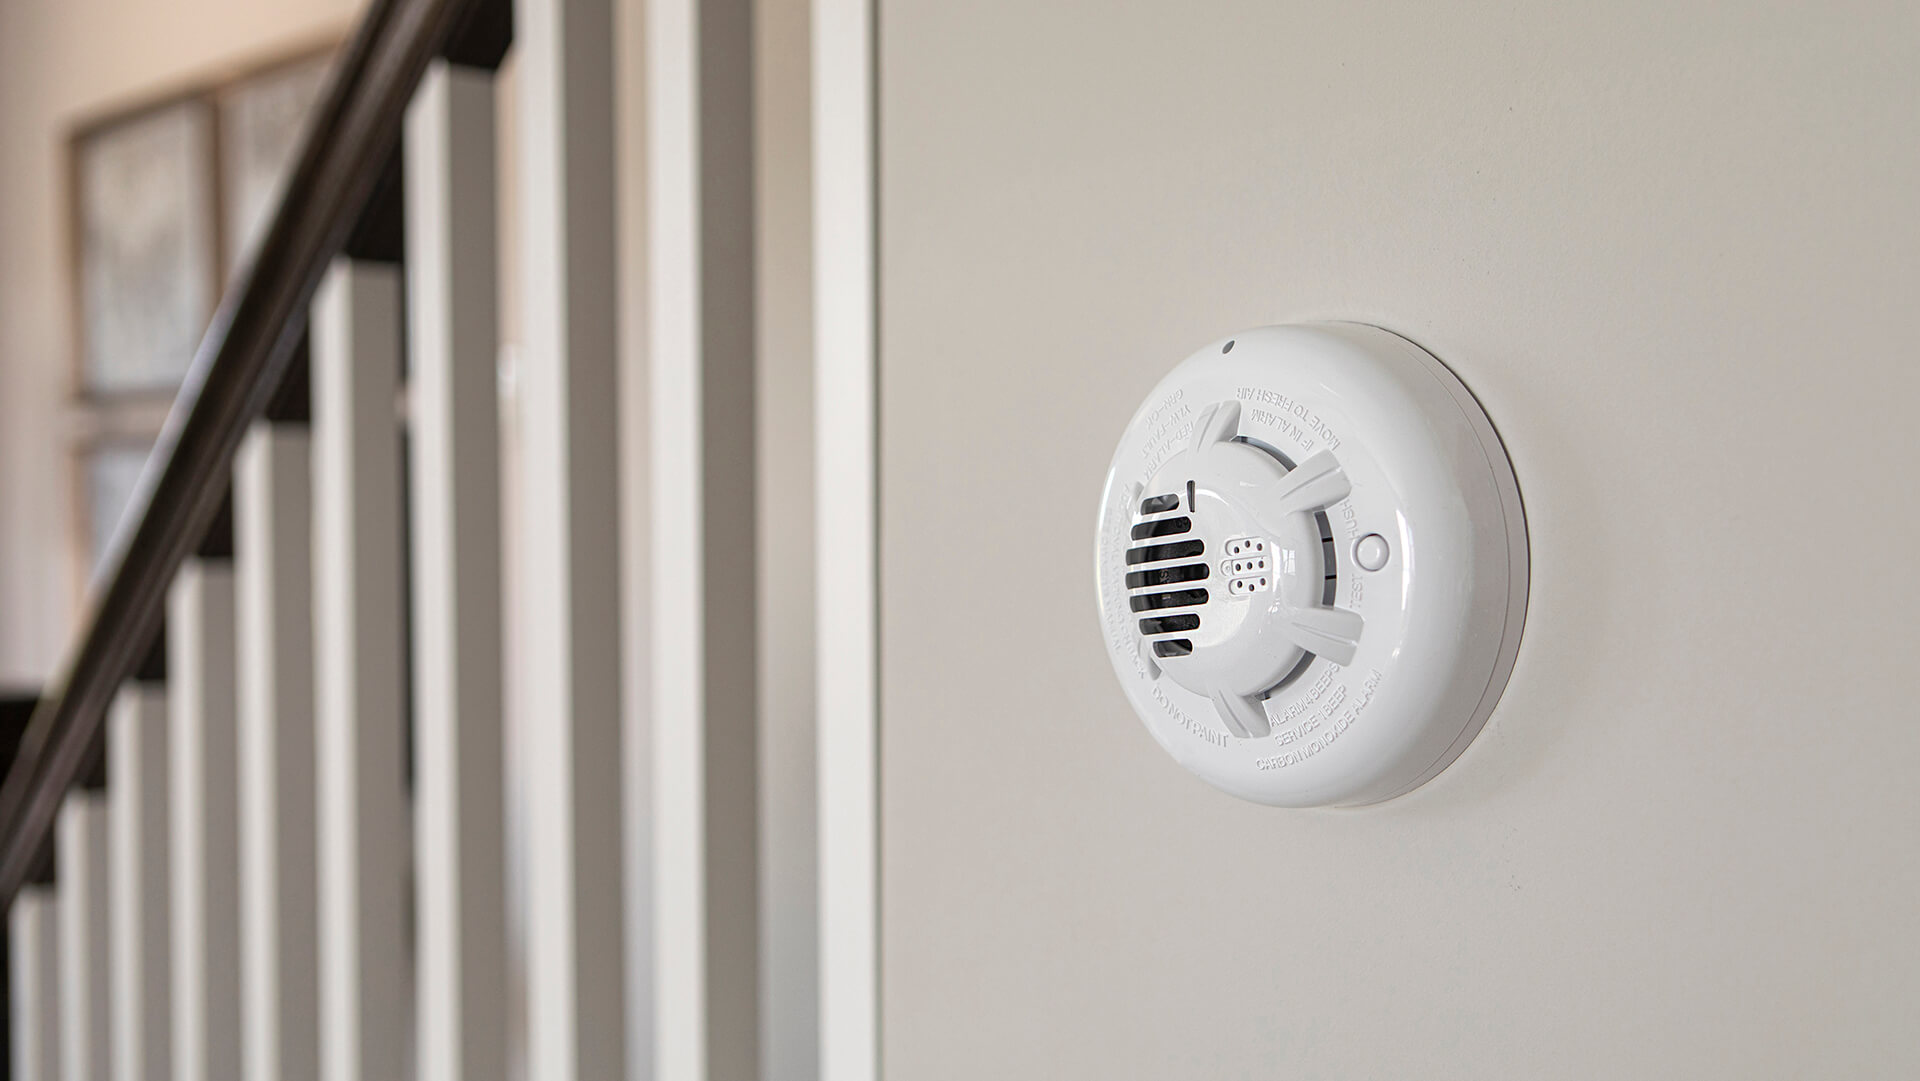 CPI Smart Carbon Monoxide Detector